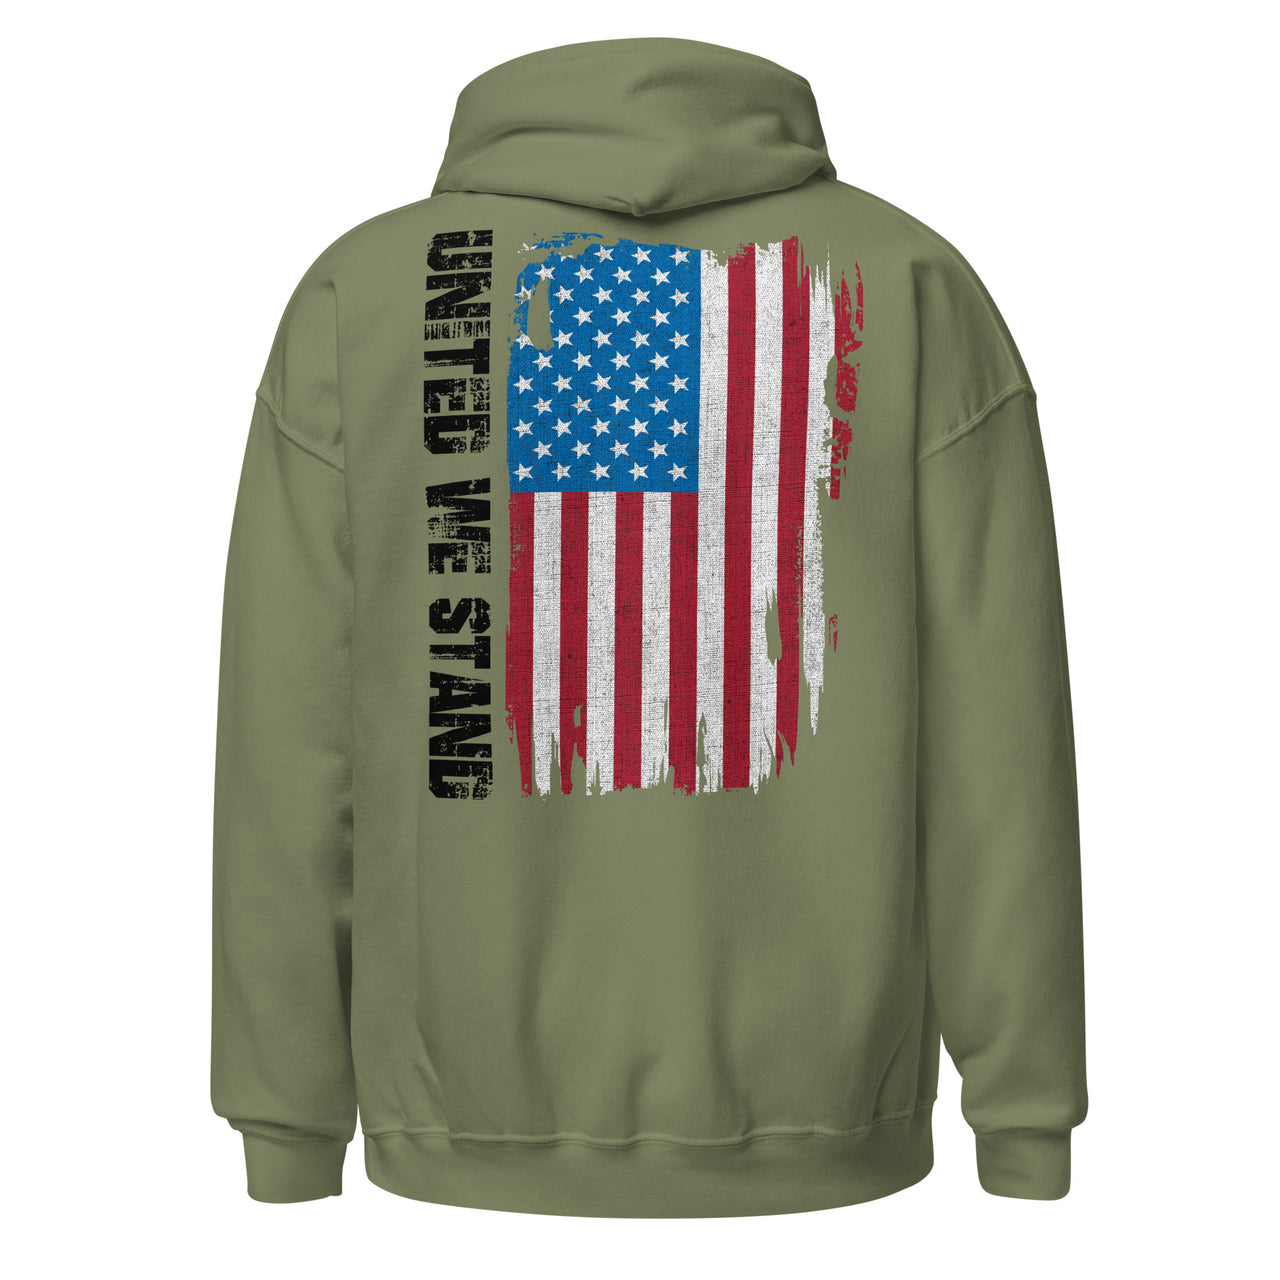 United We Stand Full Color American Flag Hoodie Sweatshirt in green back